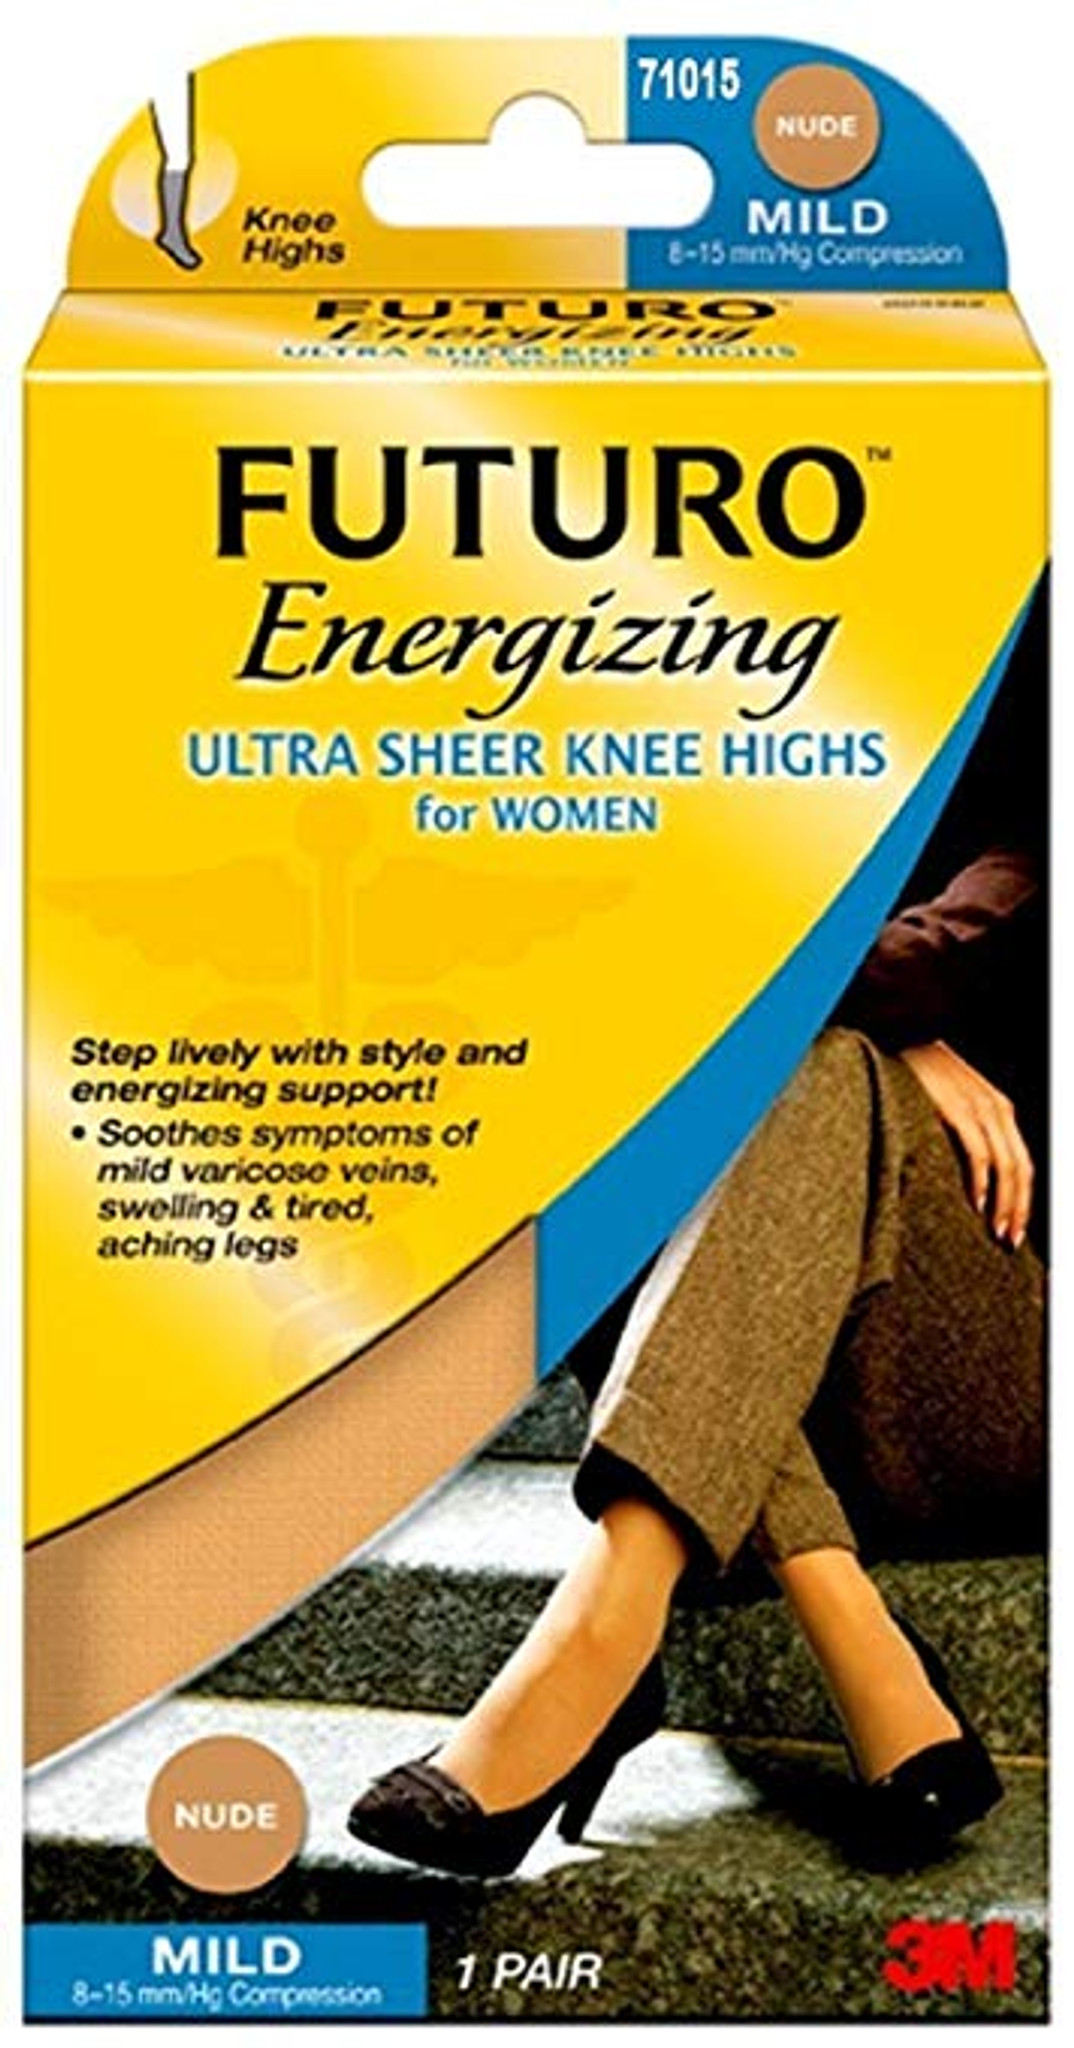 Futuro Energizing Ultra Sheer Knee Highs for Women,